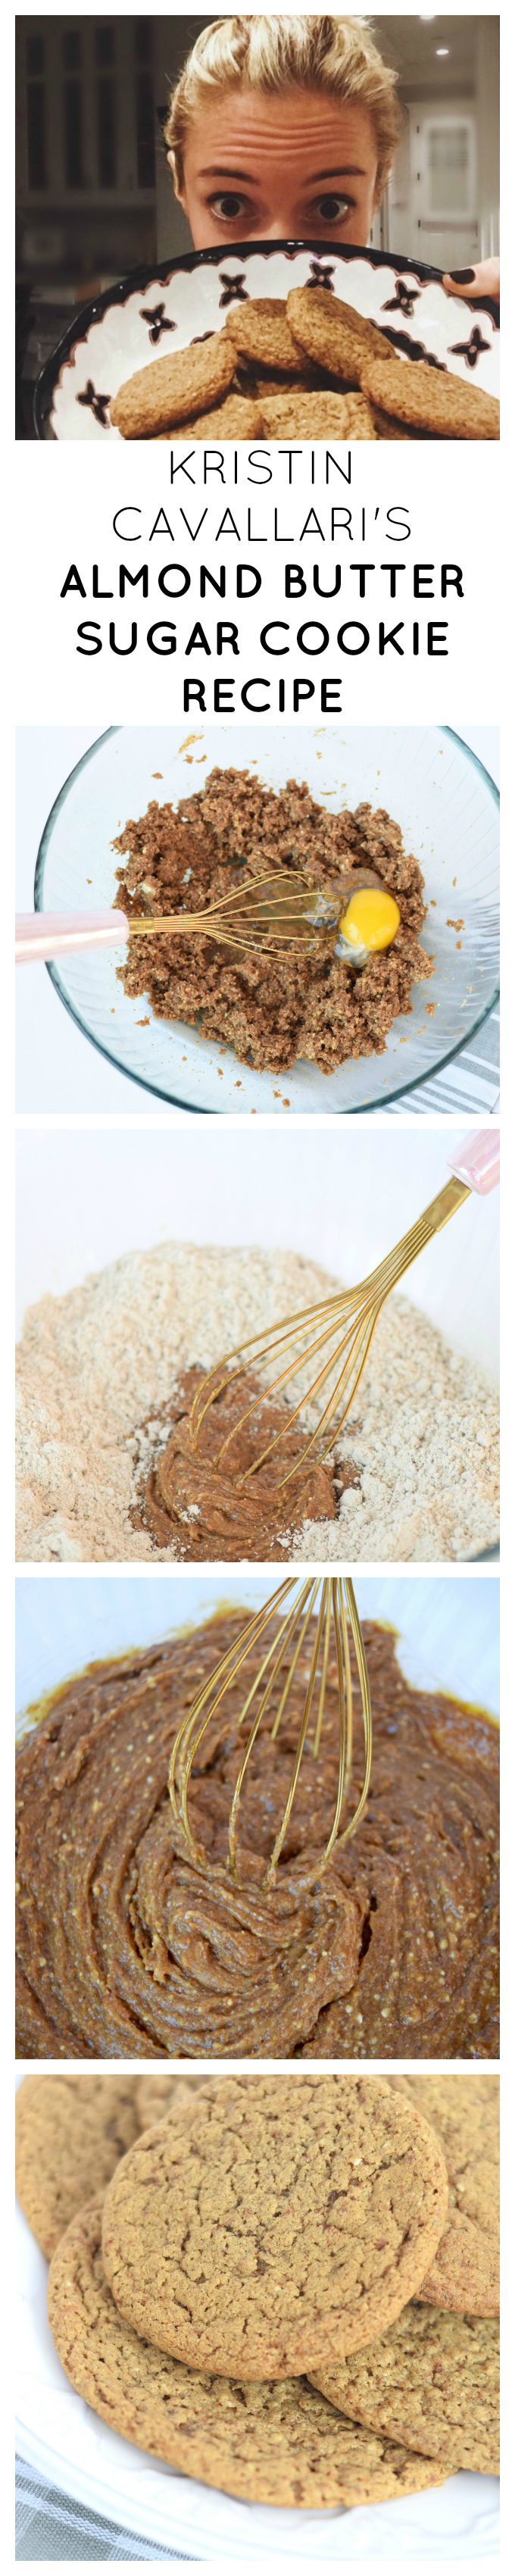 Kristin Cavallari's Almond Butter Sugar Cookie Recipe